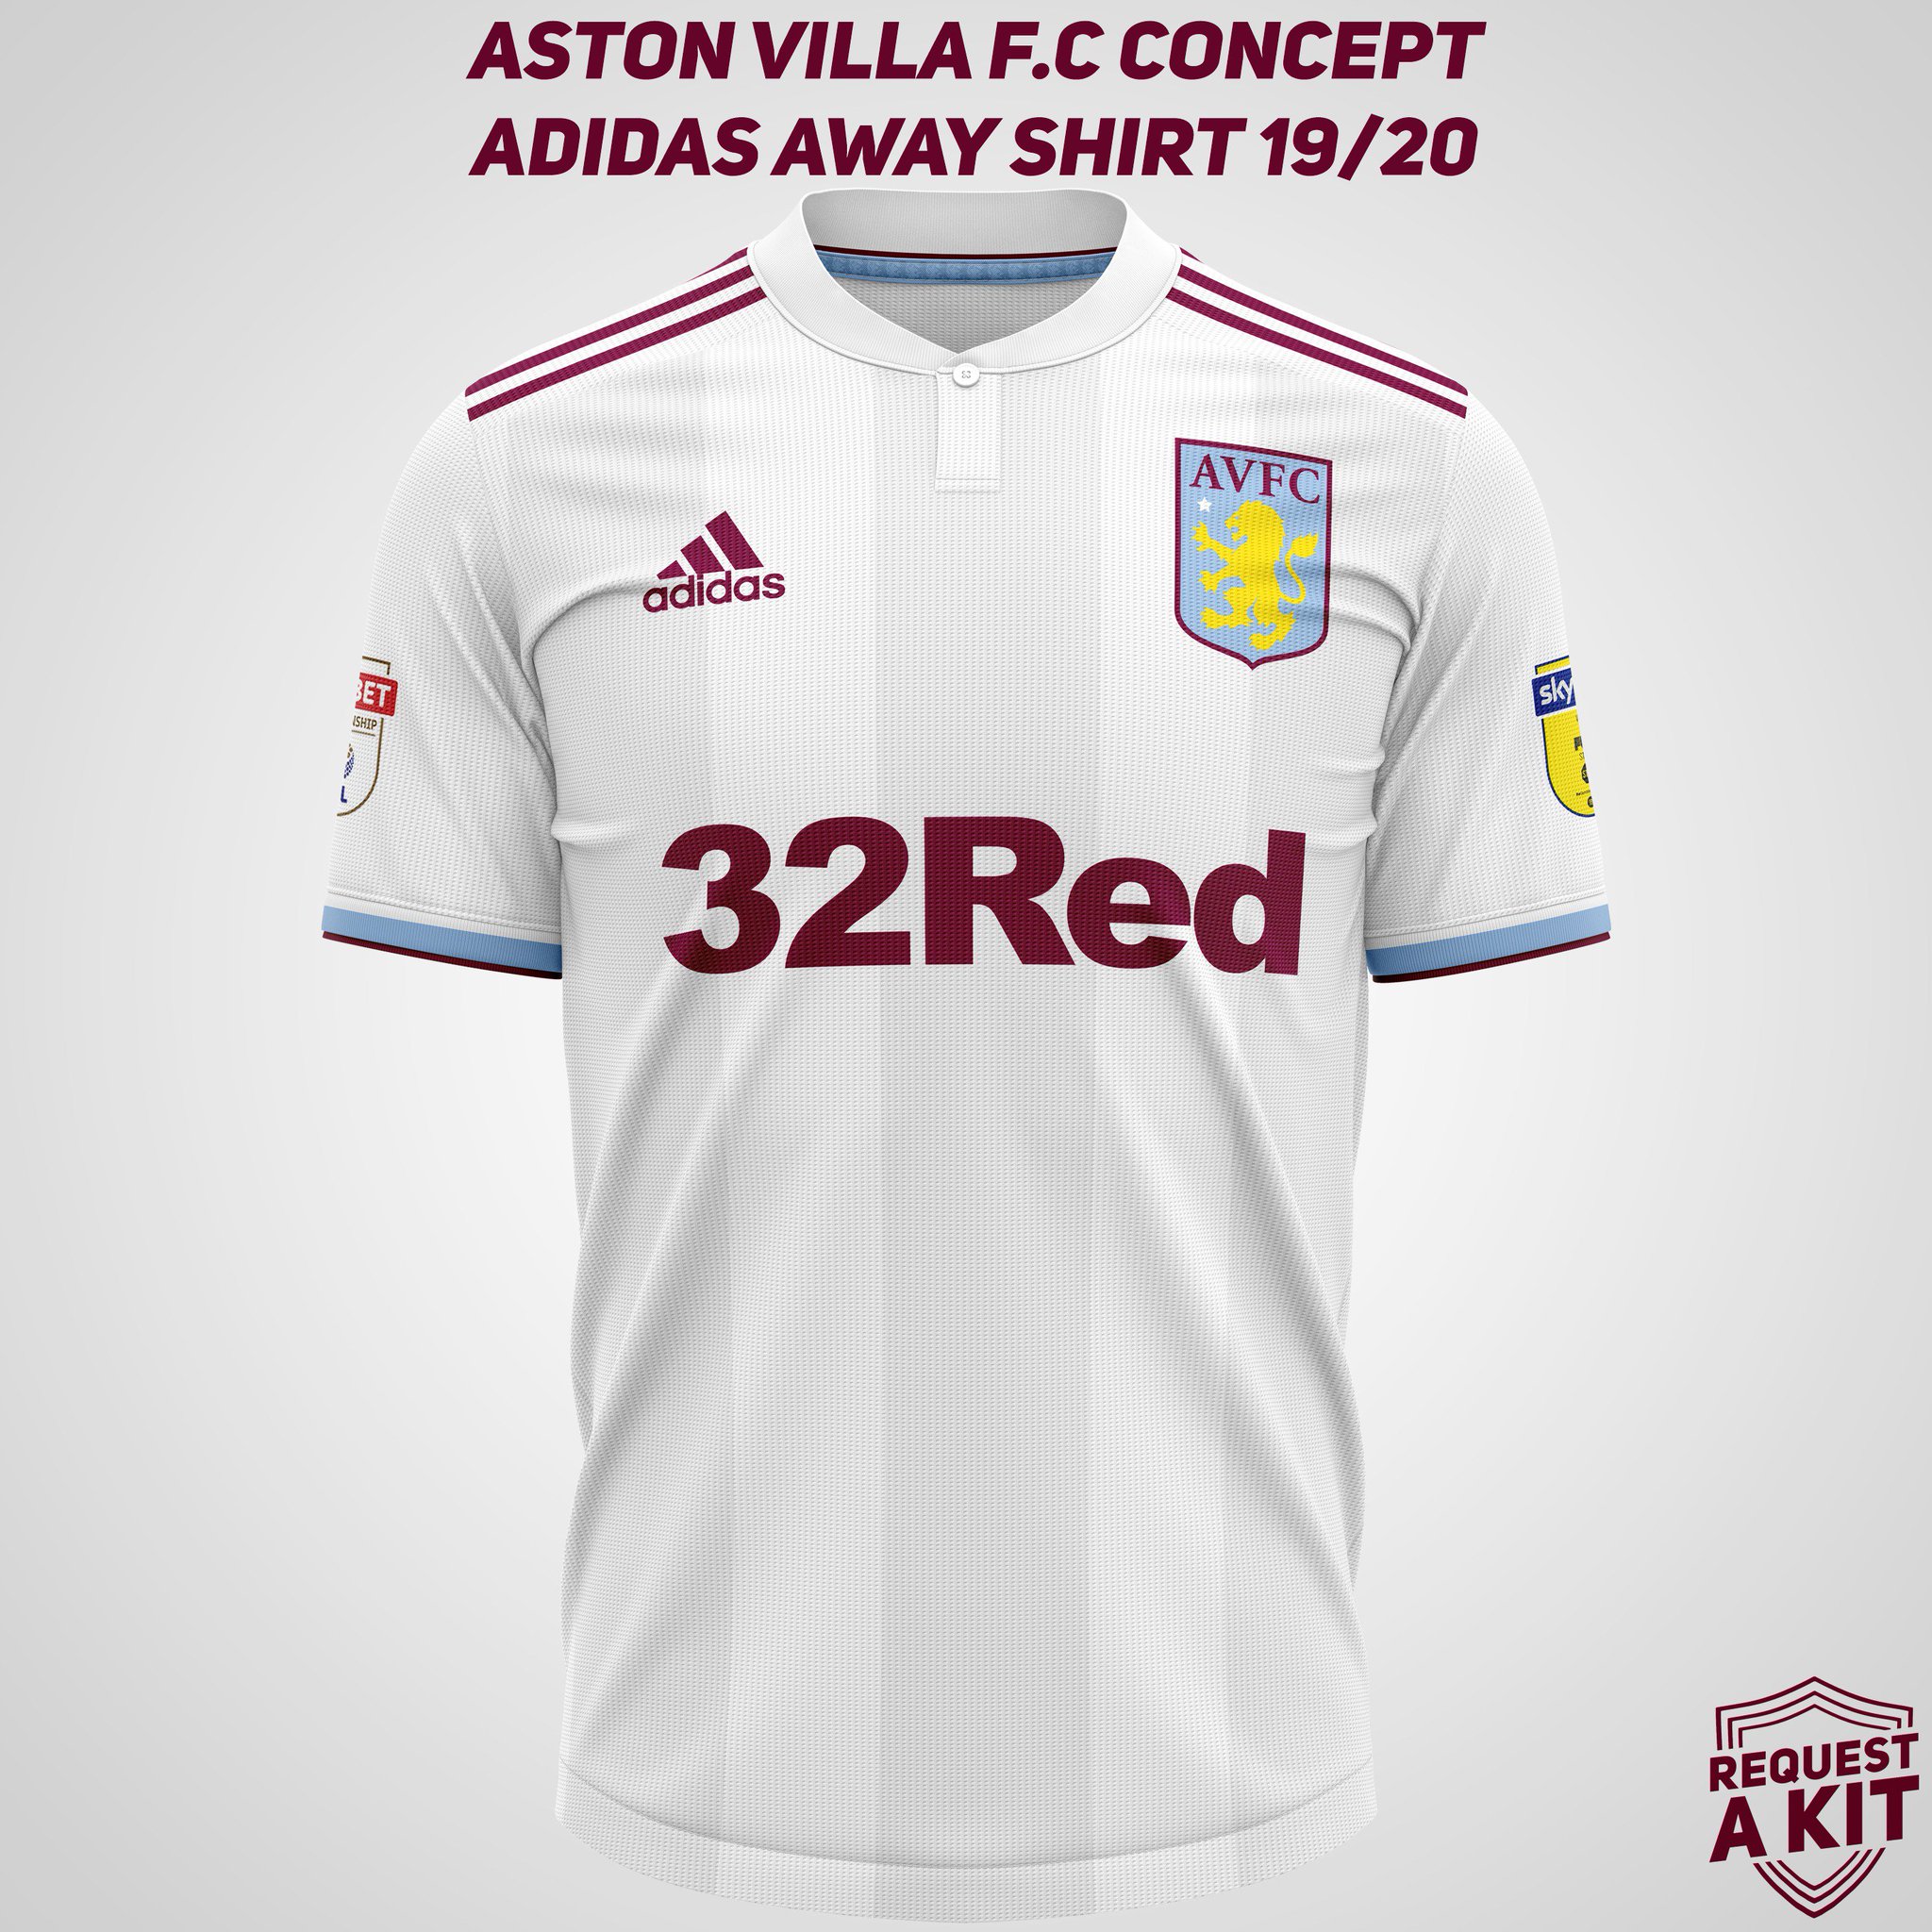 Aston Villa F.C Concept Adidas 